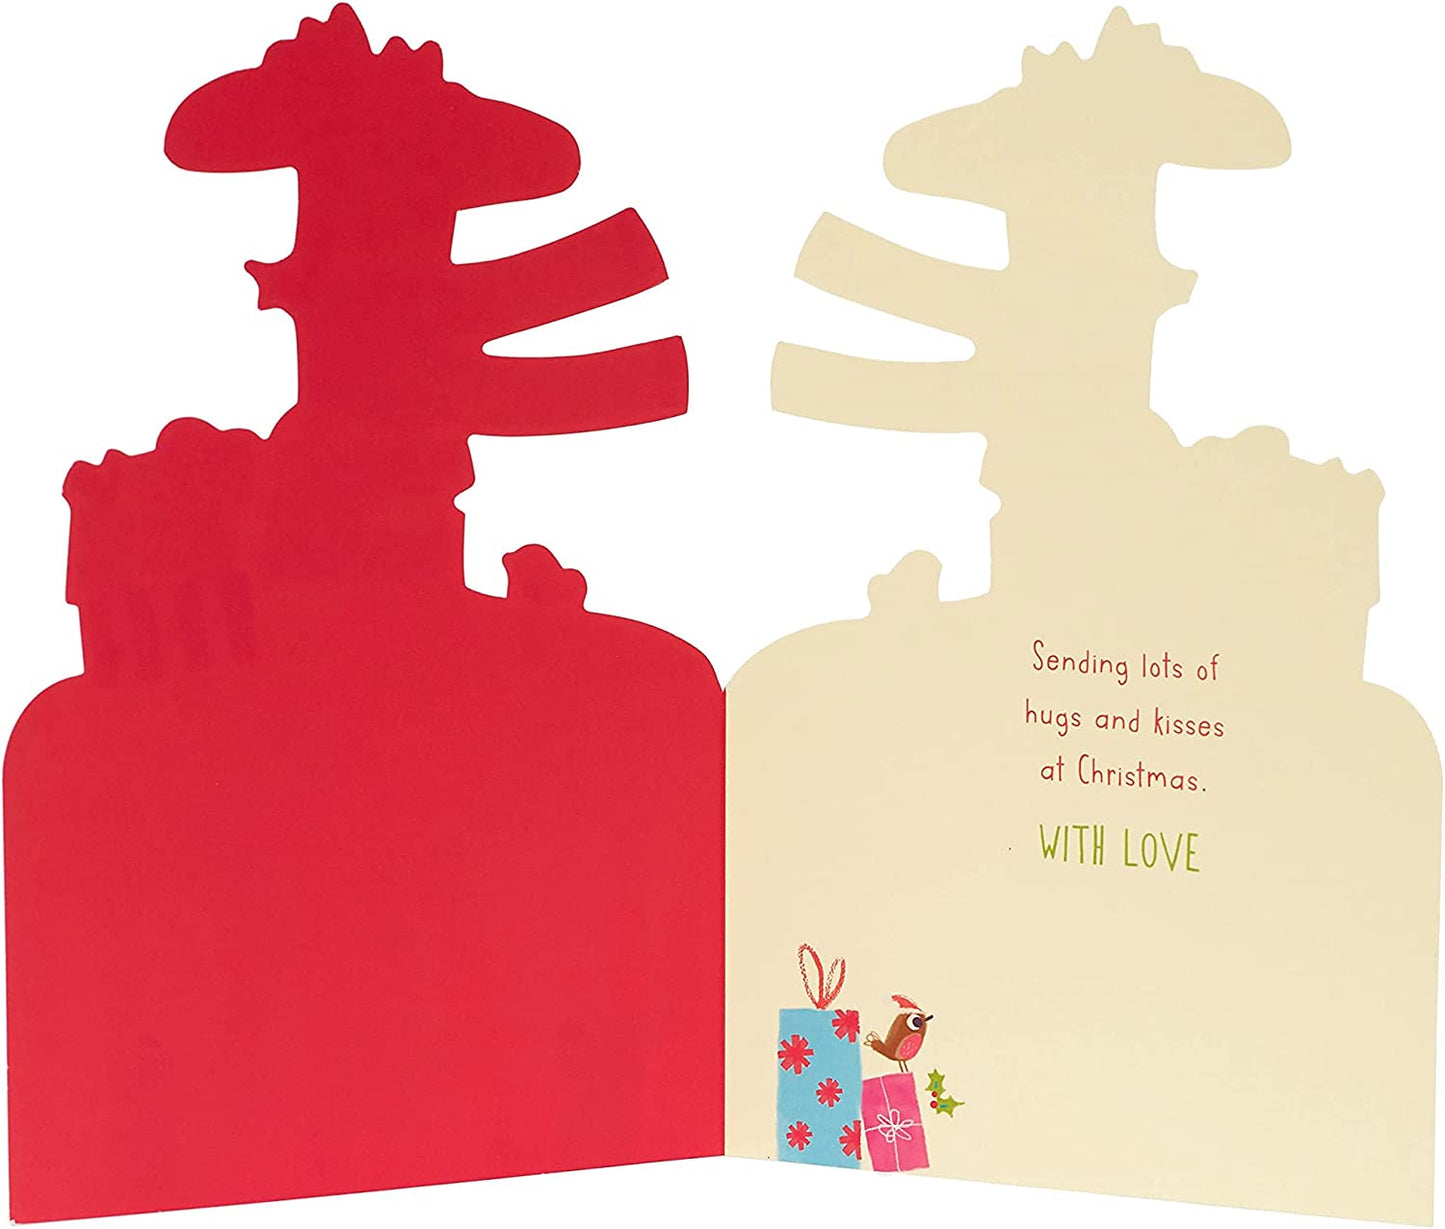 Two Giraffes with Scarf Design Nana and Grandad Christmas Card